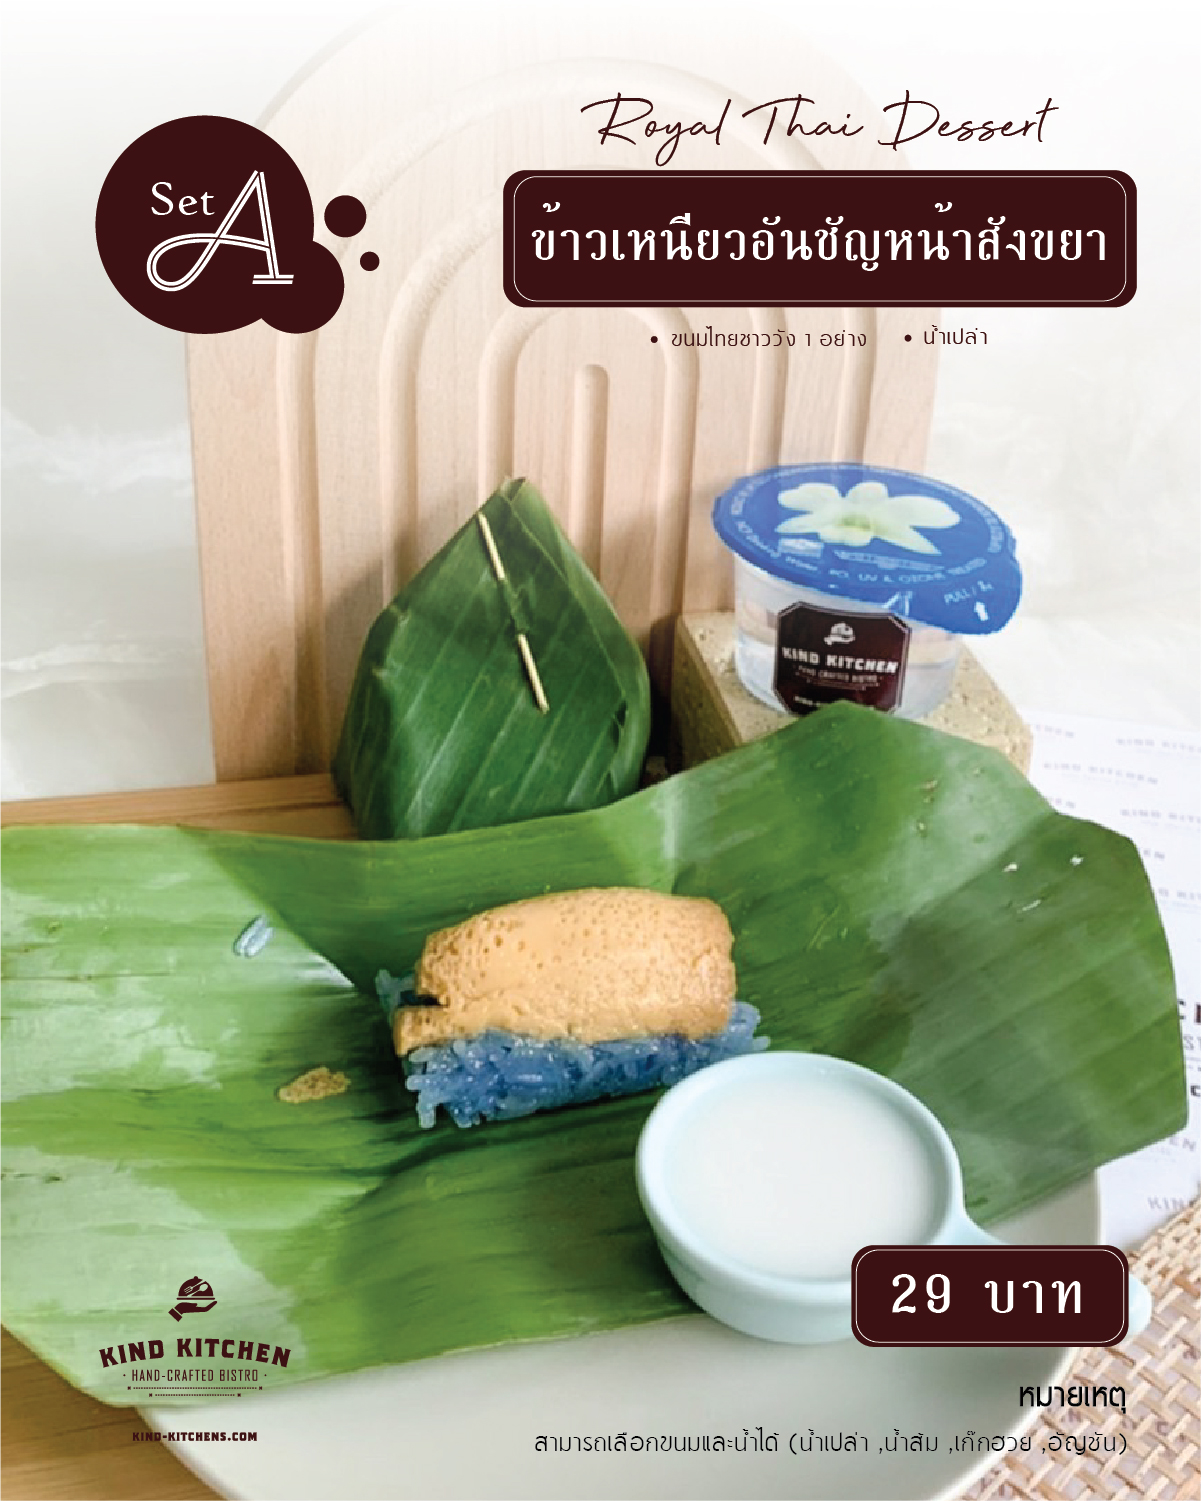 Royal Thai Dessert ข้าวเหนียวมูนอันชัญหน้าสังขยา พร้อมน้ำ (เลือกได้) Set A